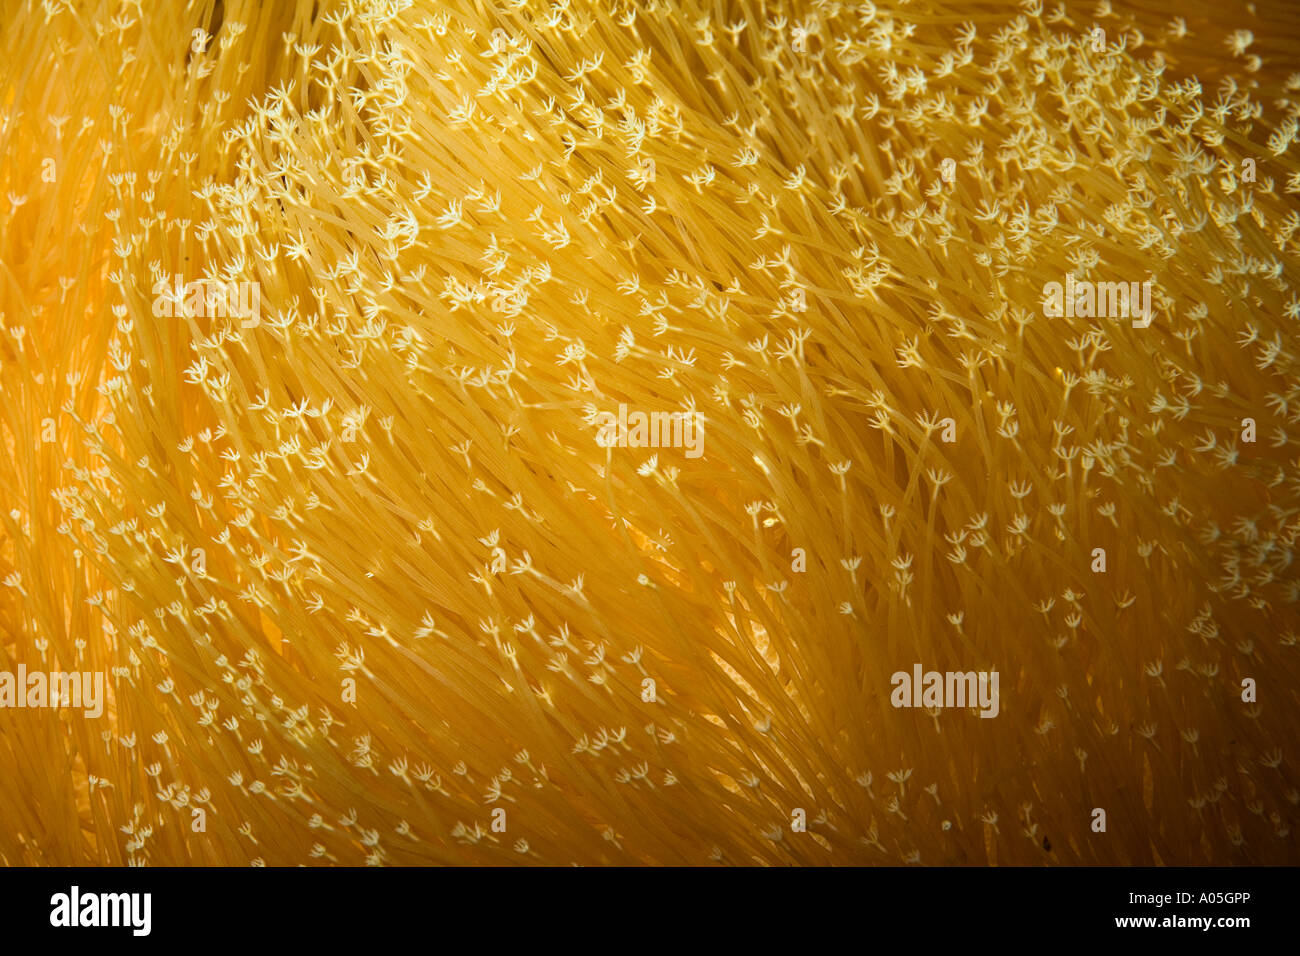 Extended feeding autozoid polyps on Sarcophyton spp leather soft coral often kept in home aquaria Stock Photo